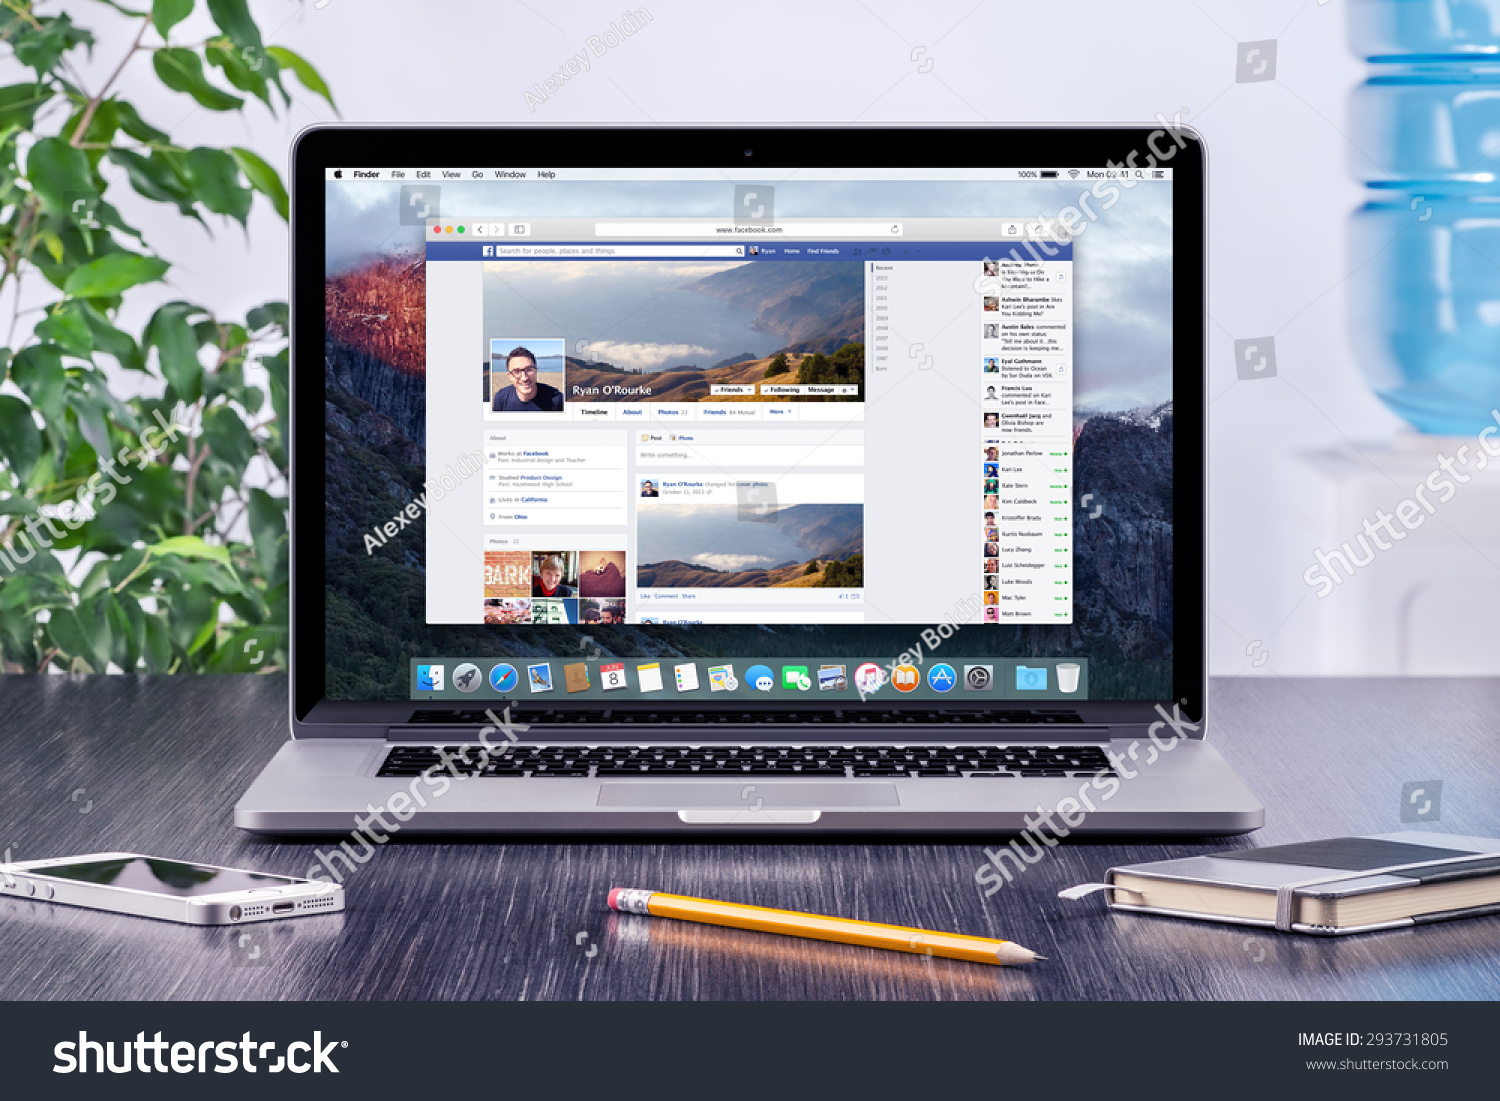 facebook for apple macbook pro